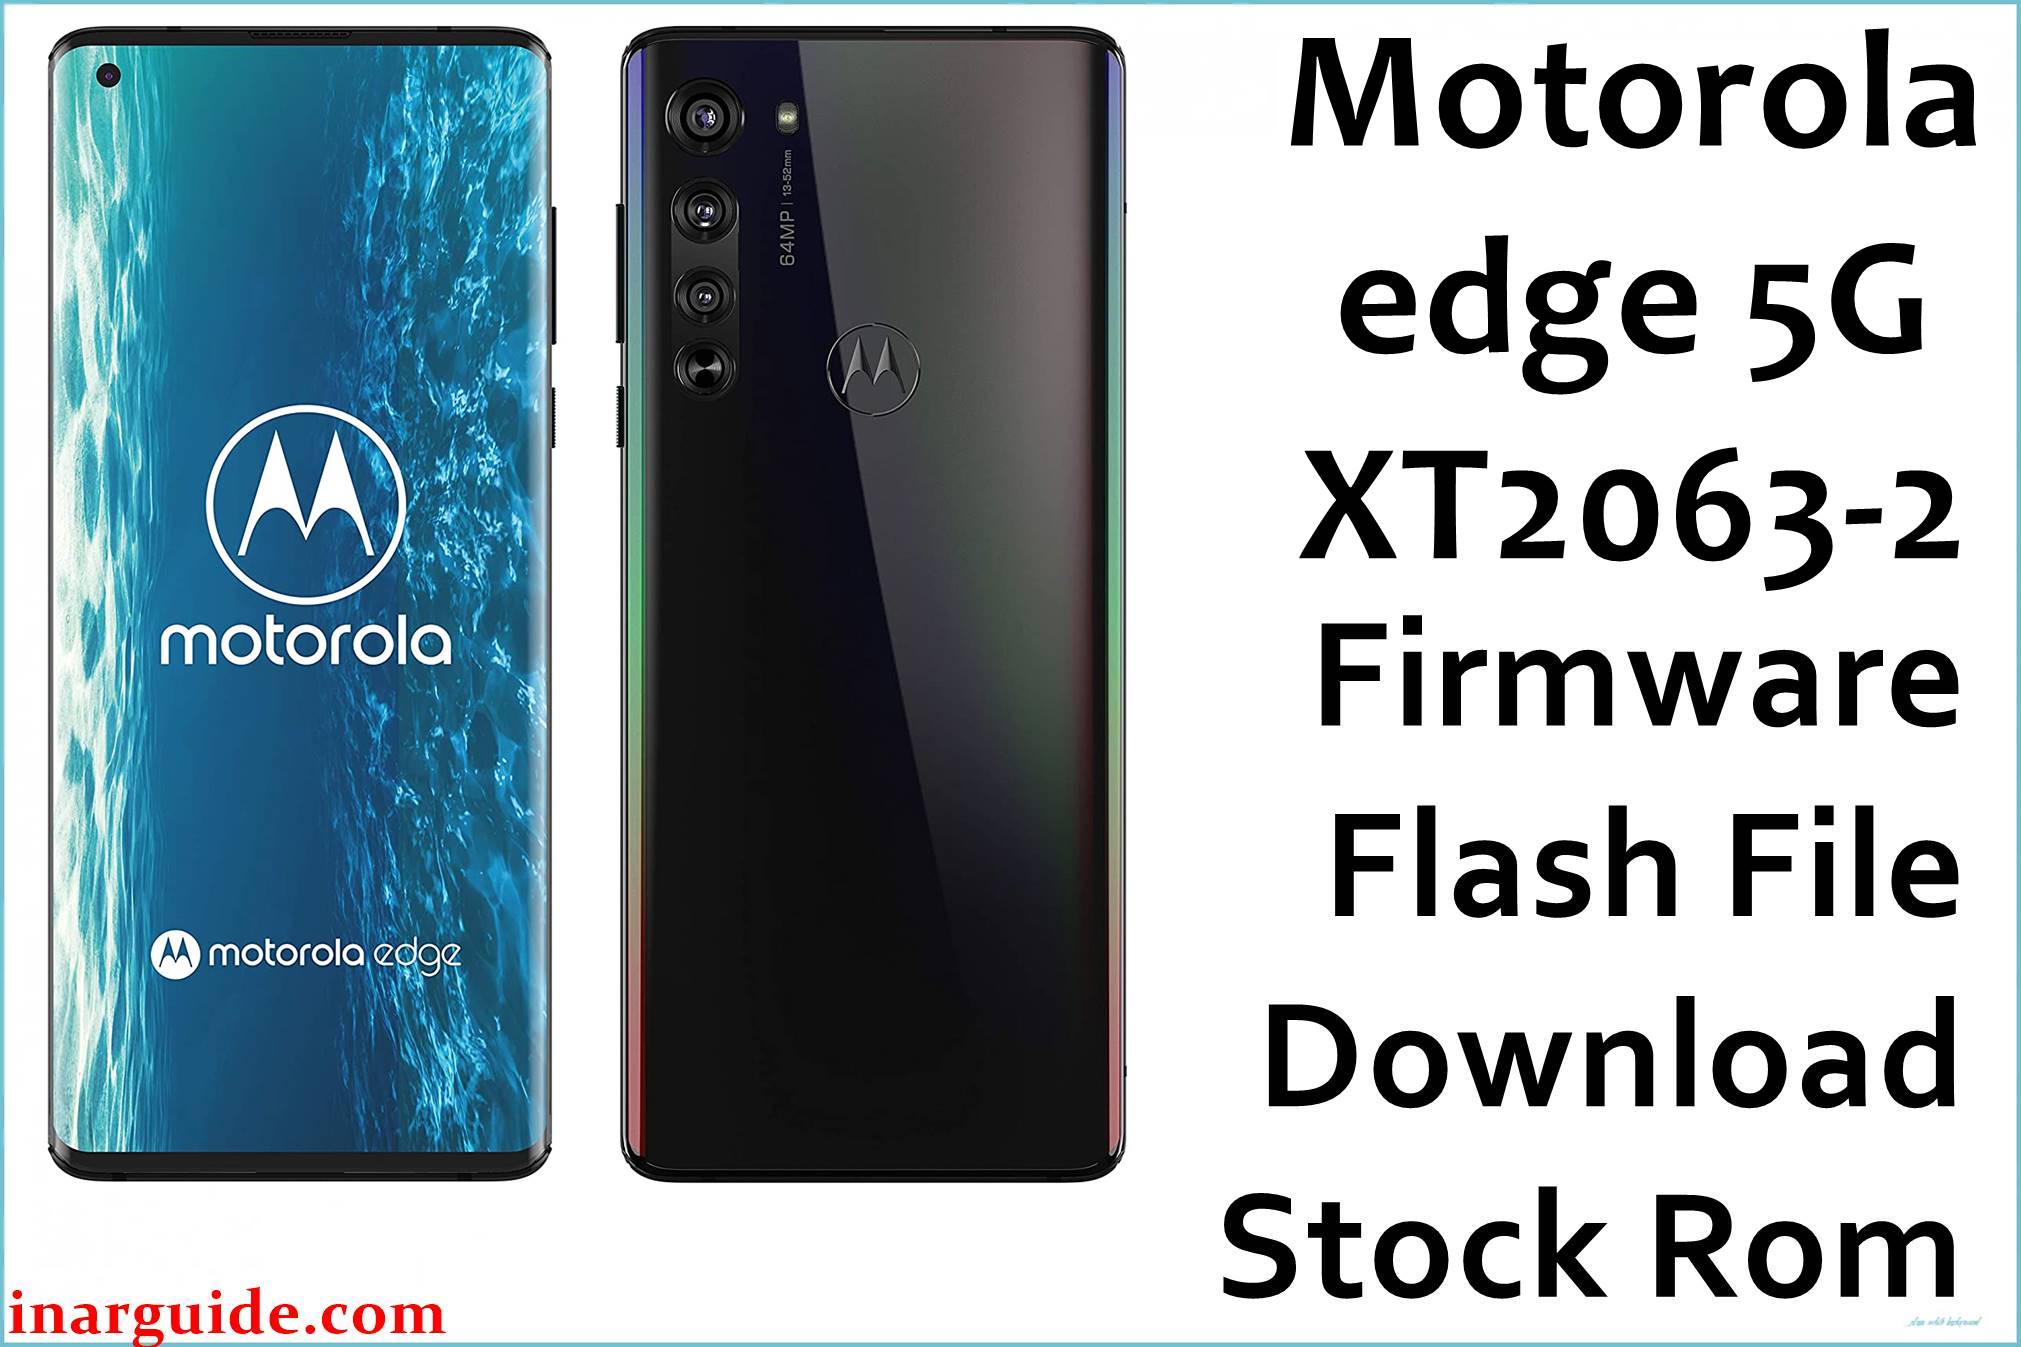 Motorola edge 5G XT2063-2